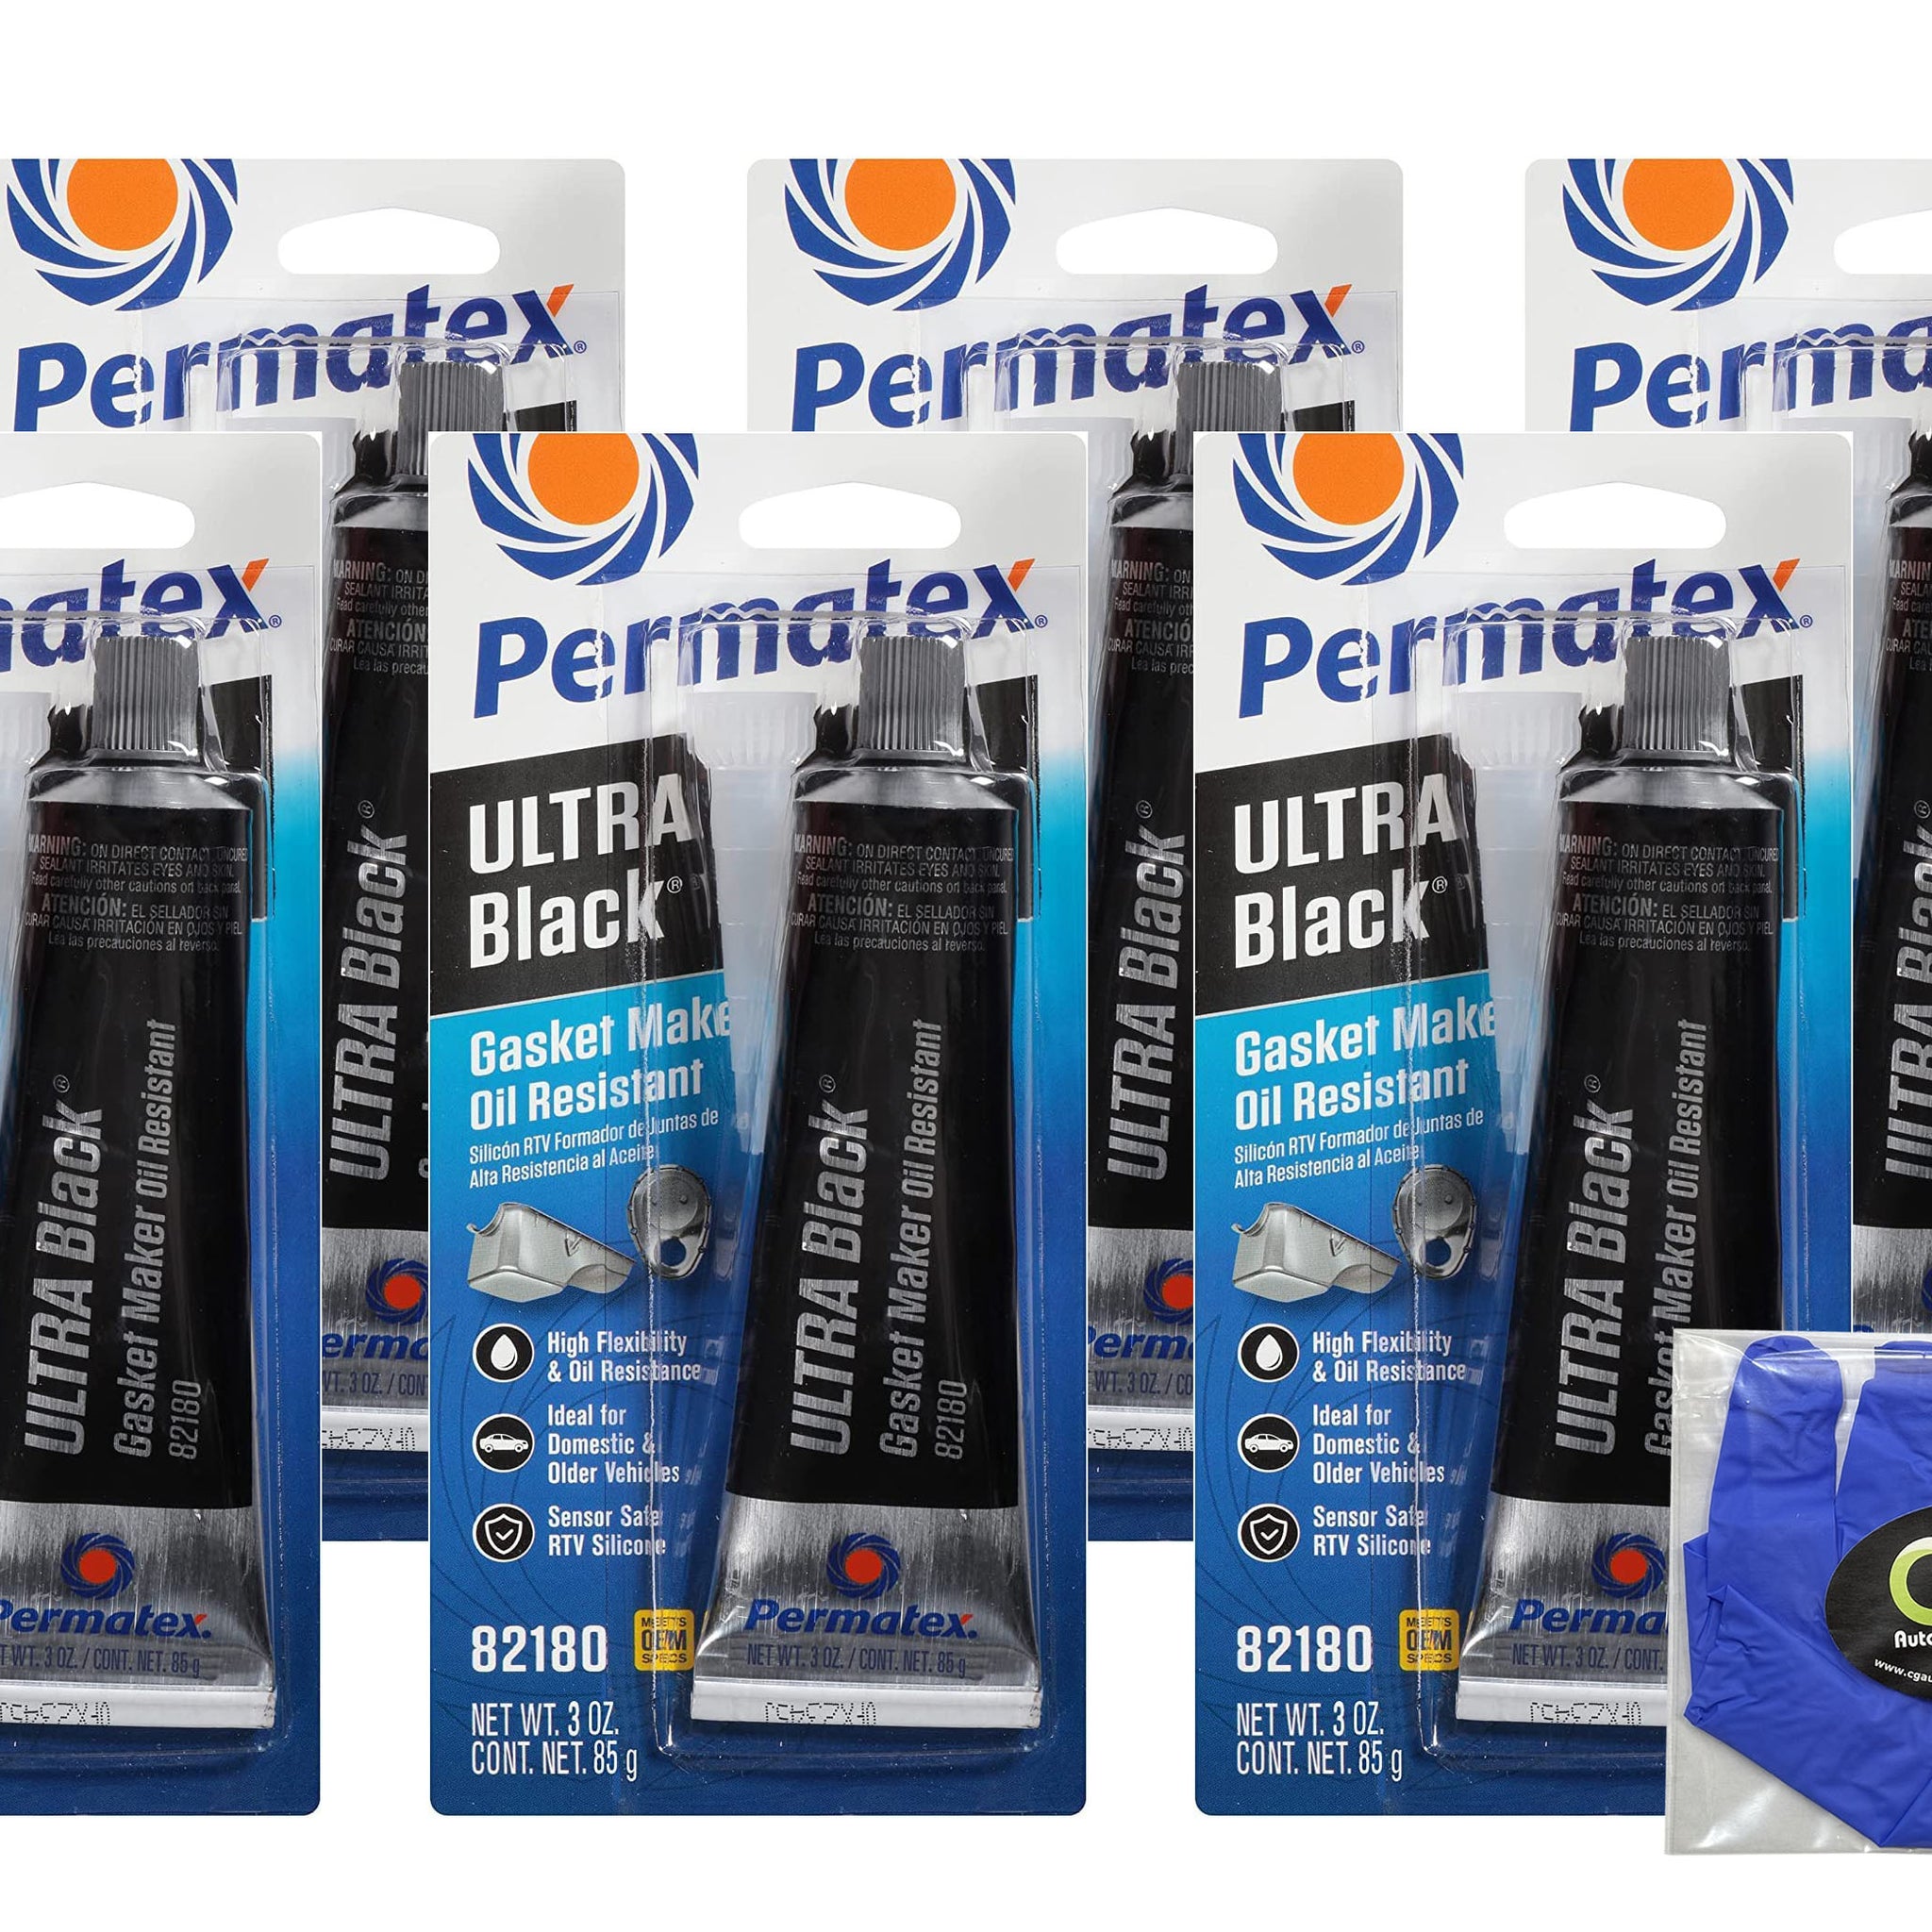 Permatex Ultra Black 82180 3.35Oz Silicone RTV Gasket Maker Pack of 6, Permatex Gasket Maker with Biodegradable Disposable Gloves Bundle(8 Items)